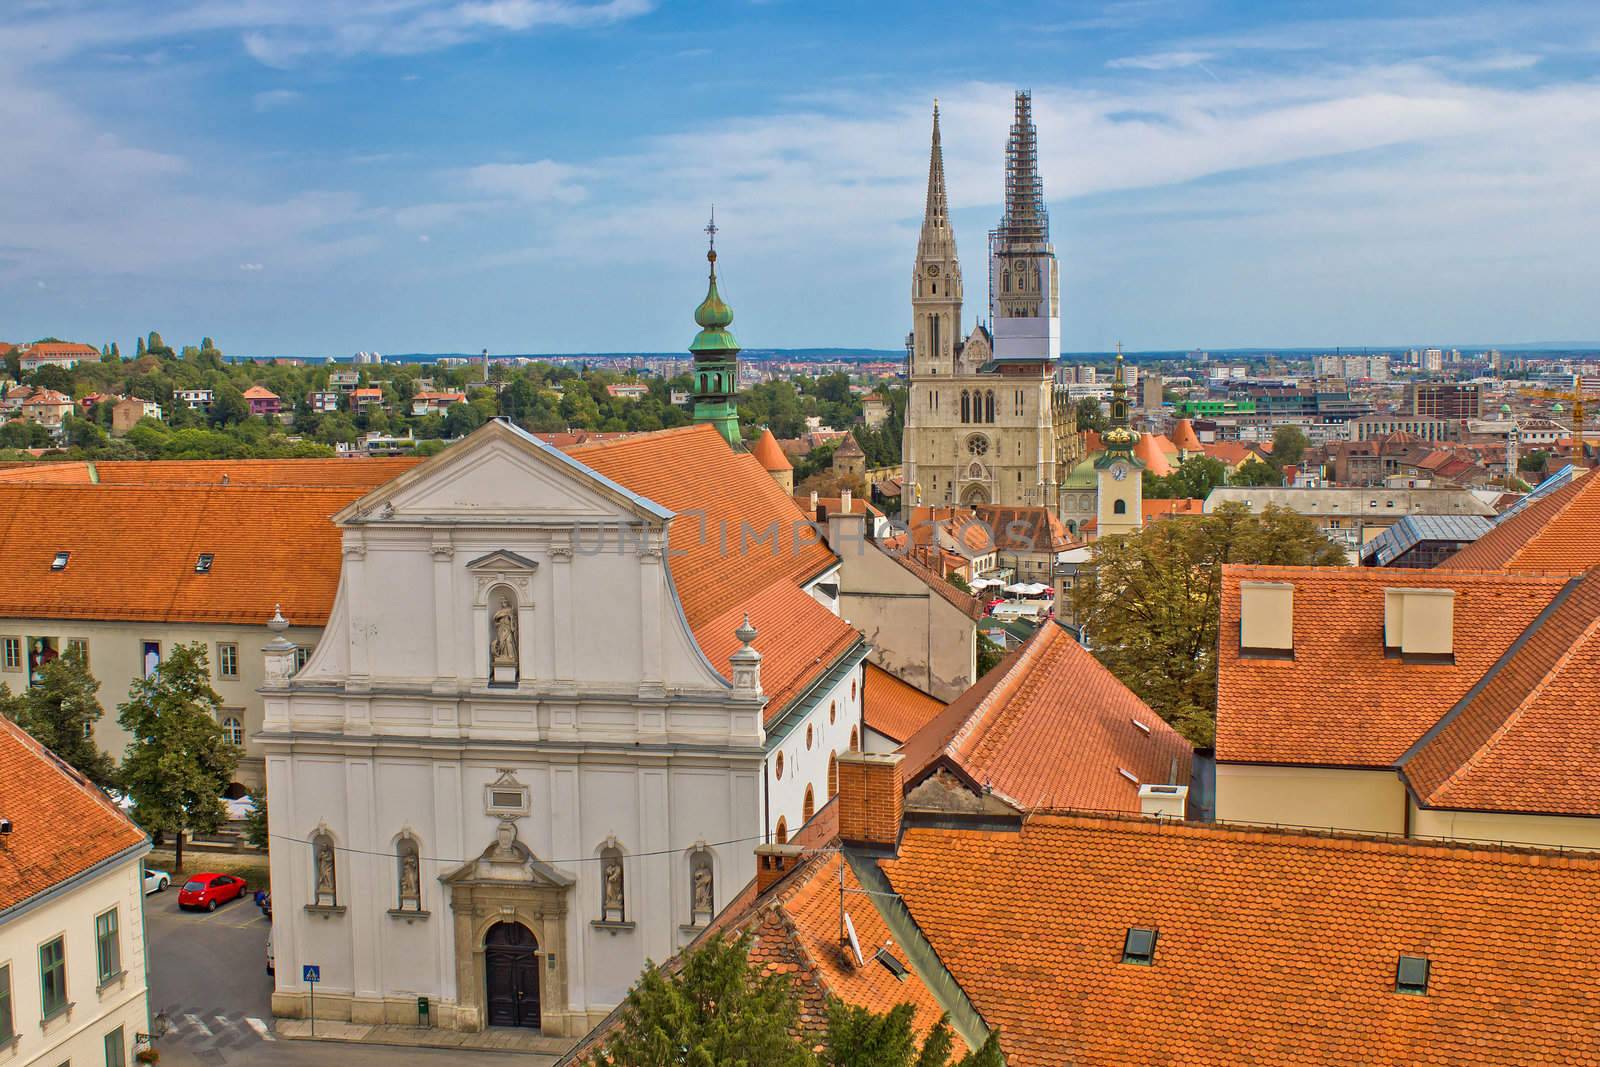 Historic upper town of Zagreb - capital of Croatia